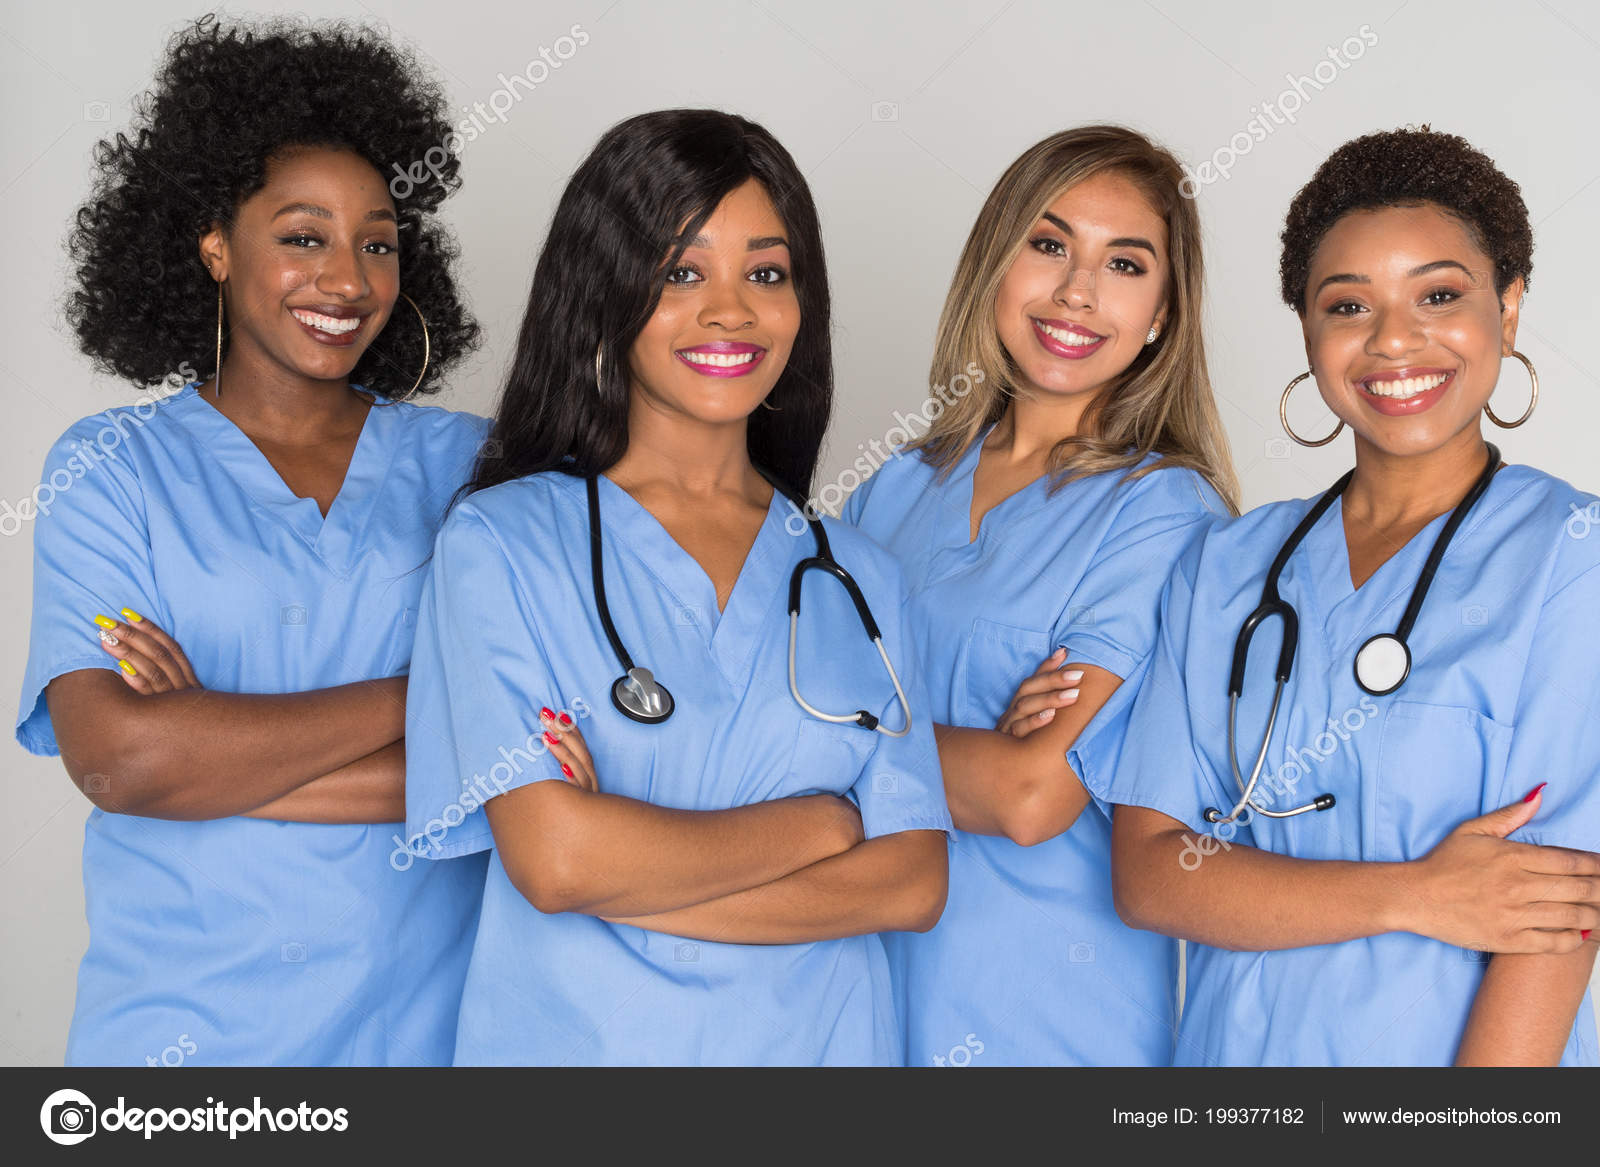 https://st4.depositphotos.com/1524643/19937/i/1600/depositphotos_199377182-stock-photo-large-group-female-nurses-working.jpg